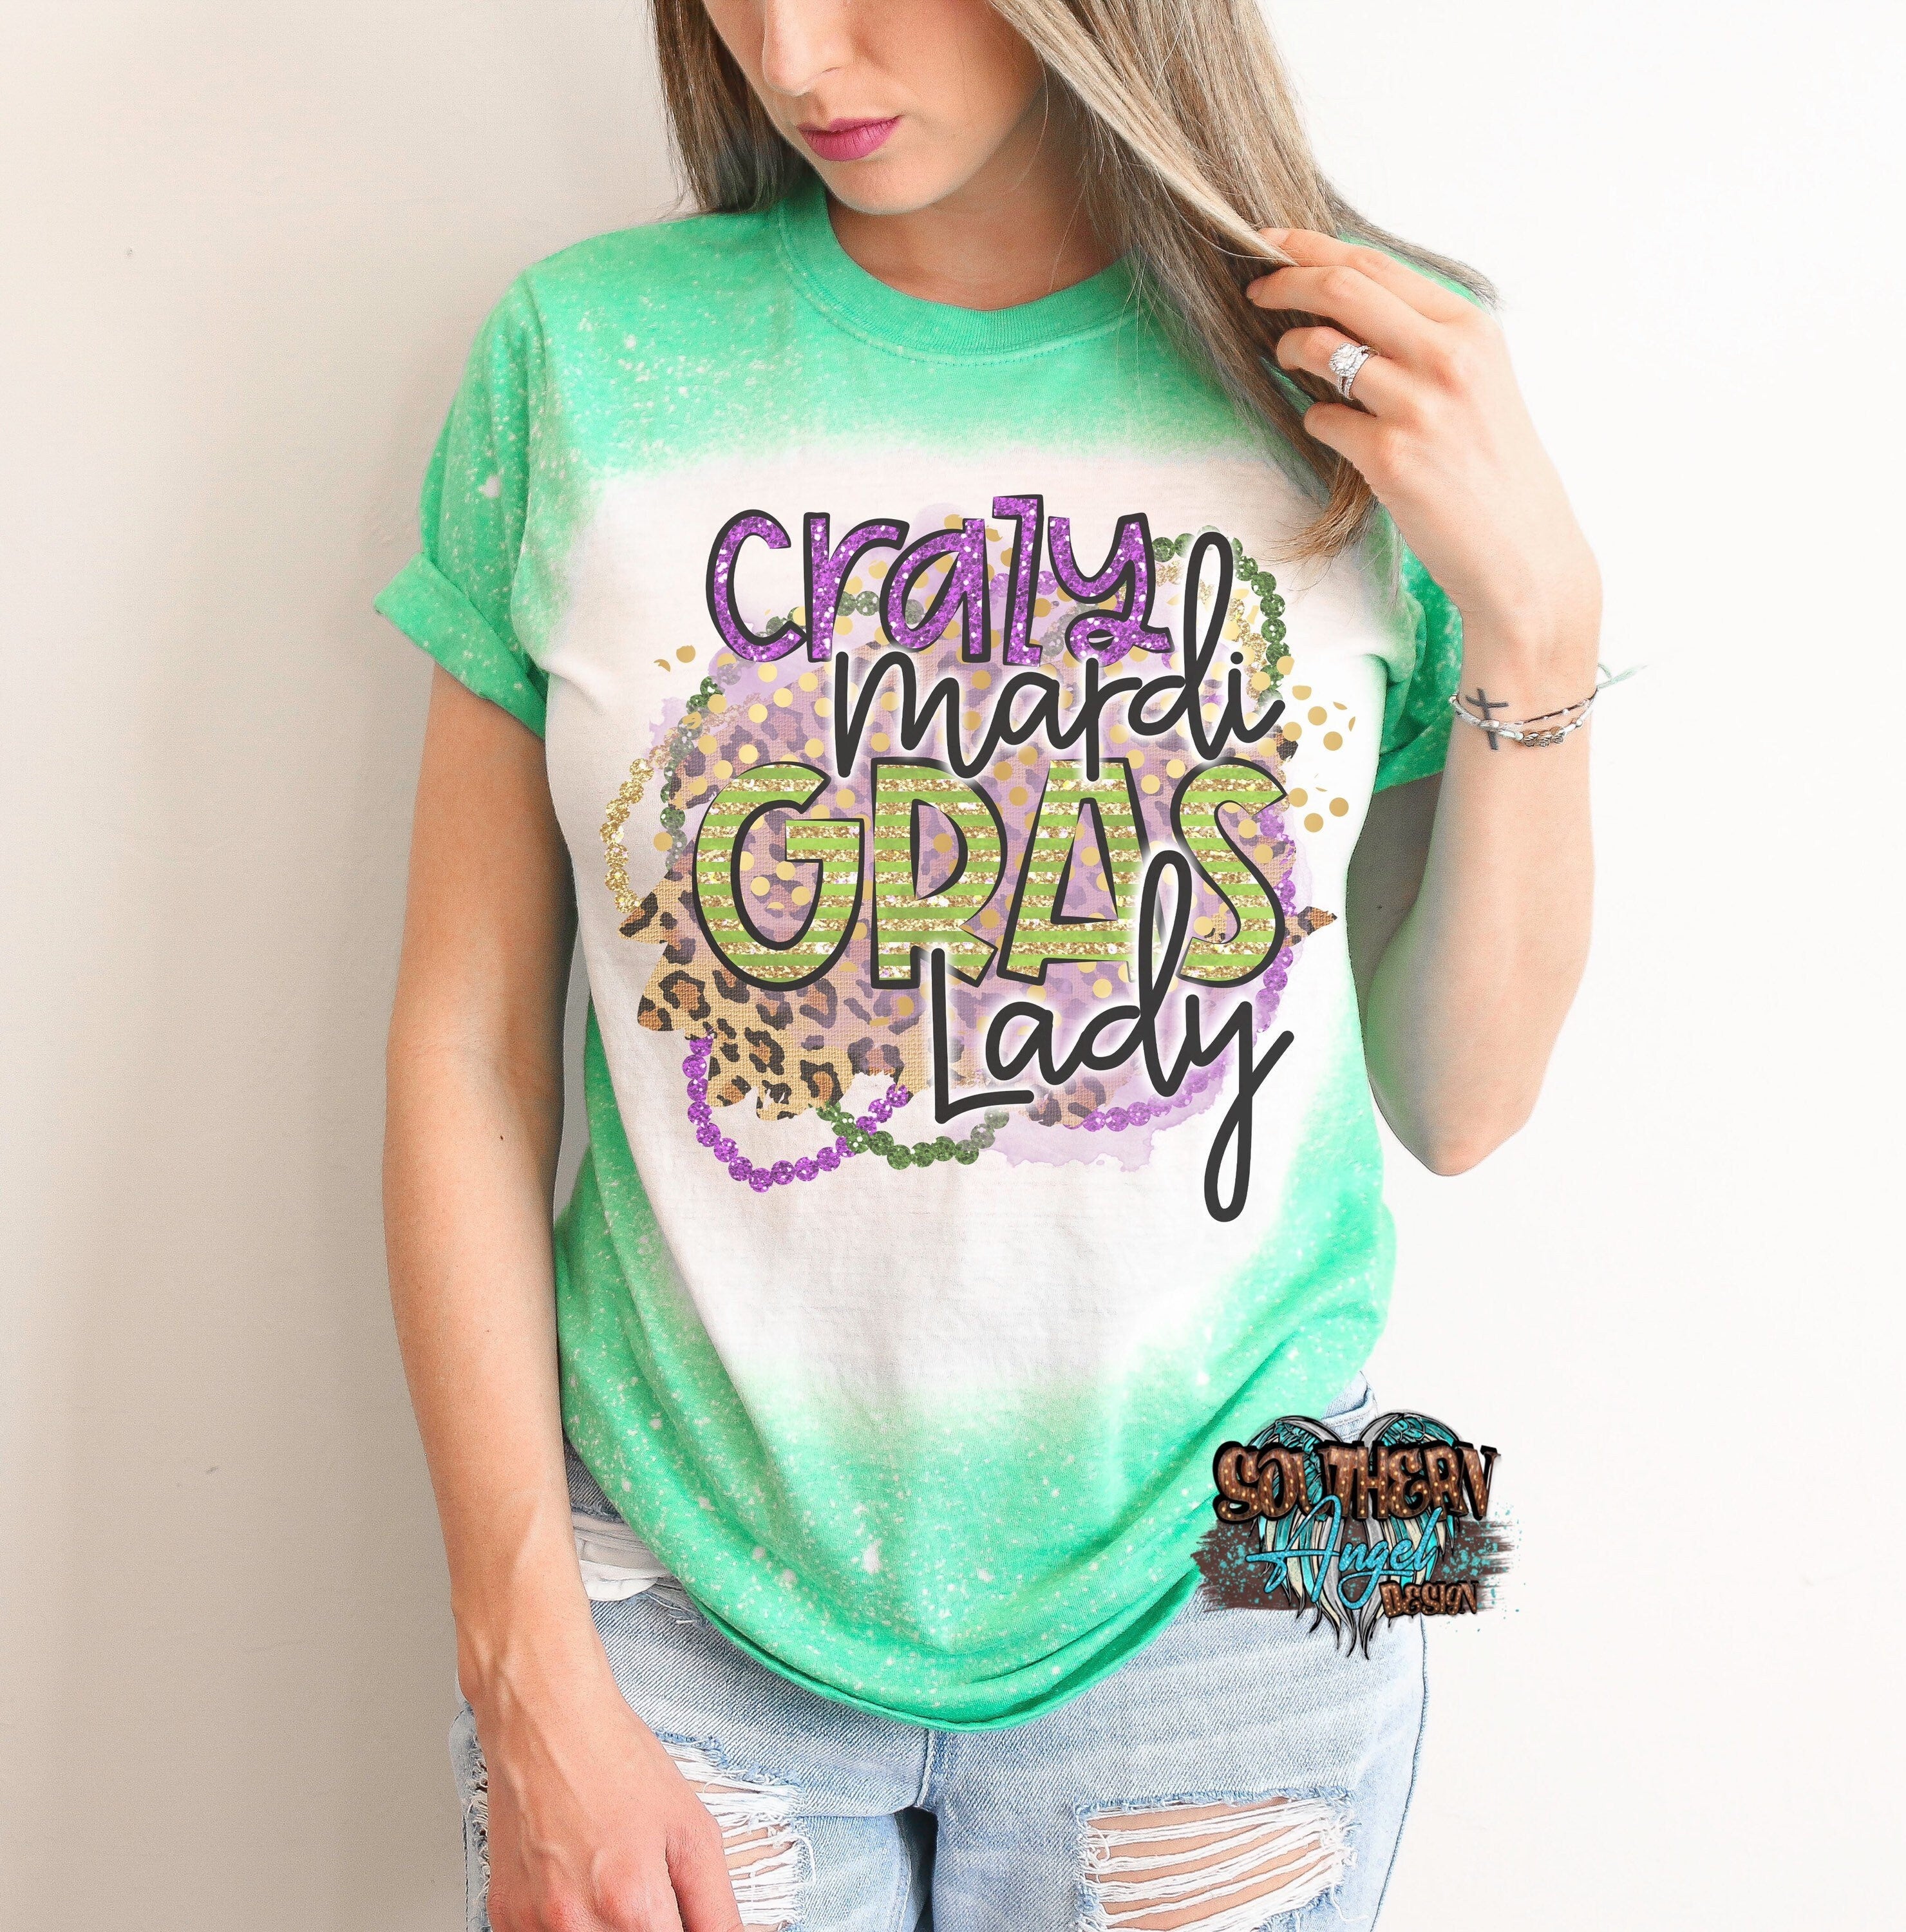 Bleached Mardi Gras shirt, Crazy Mardi Gras Lady, Nola shirt, Bleached TShirt, Women’s Mardi Gras shirt, King Cake shirt